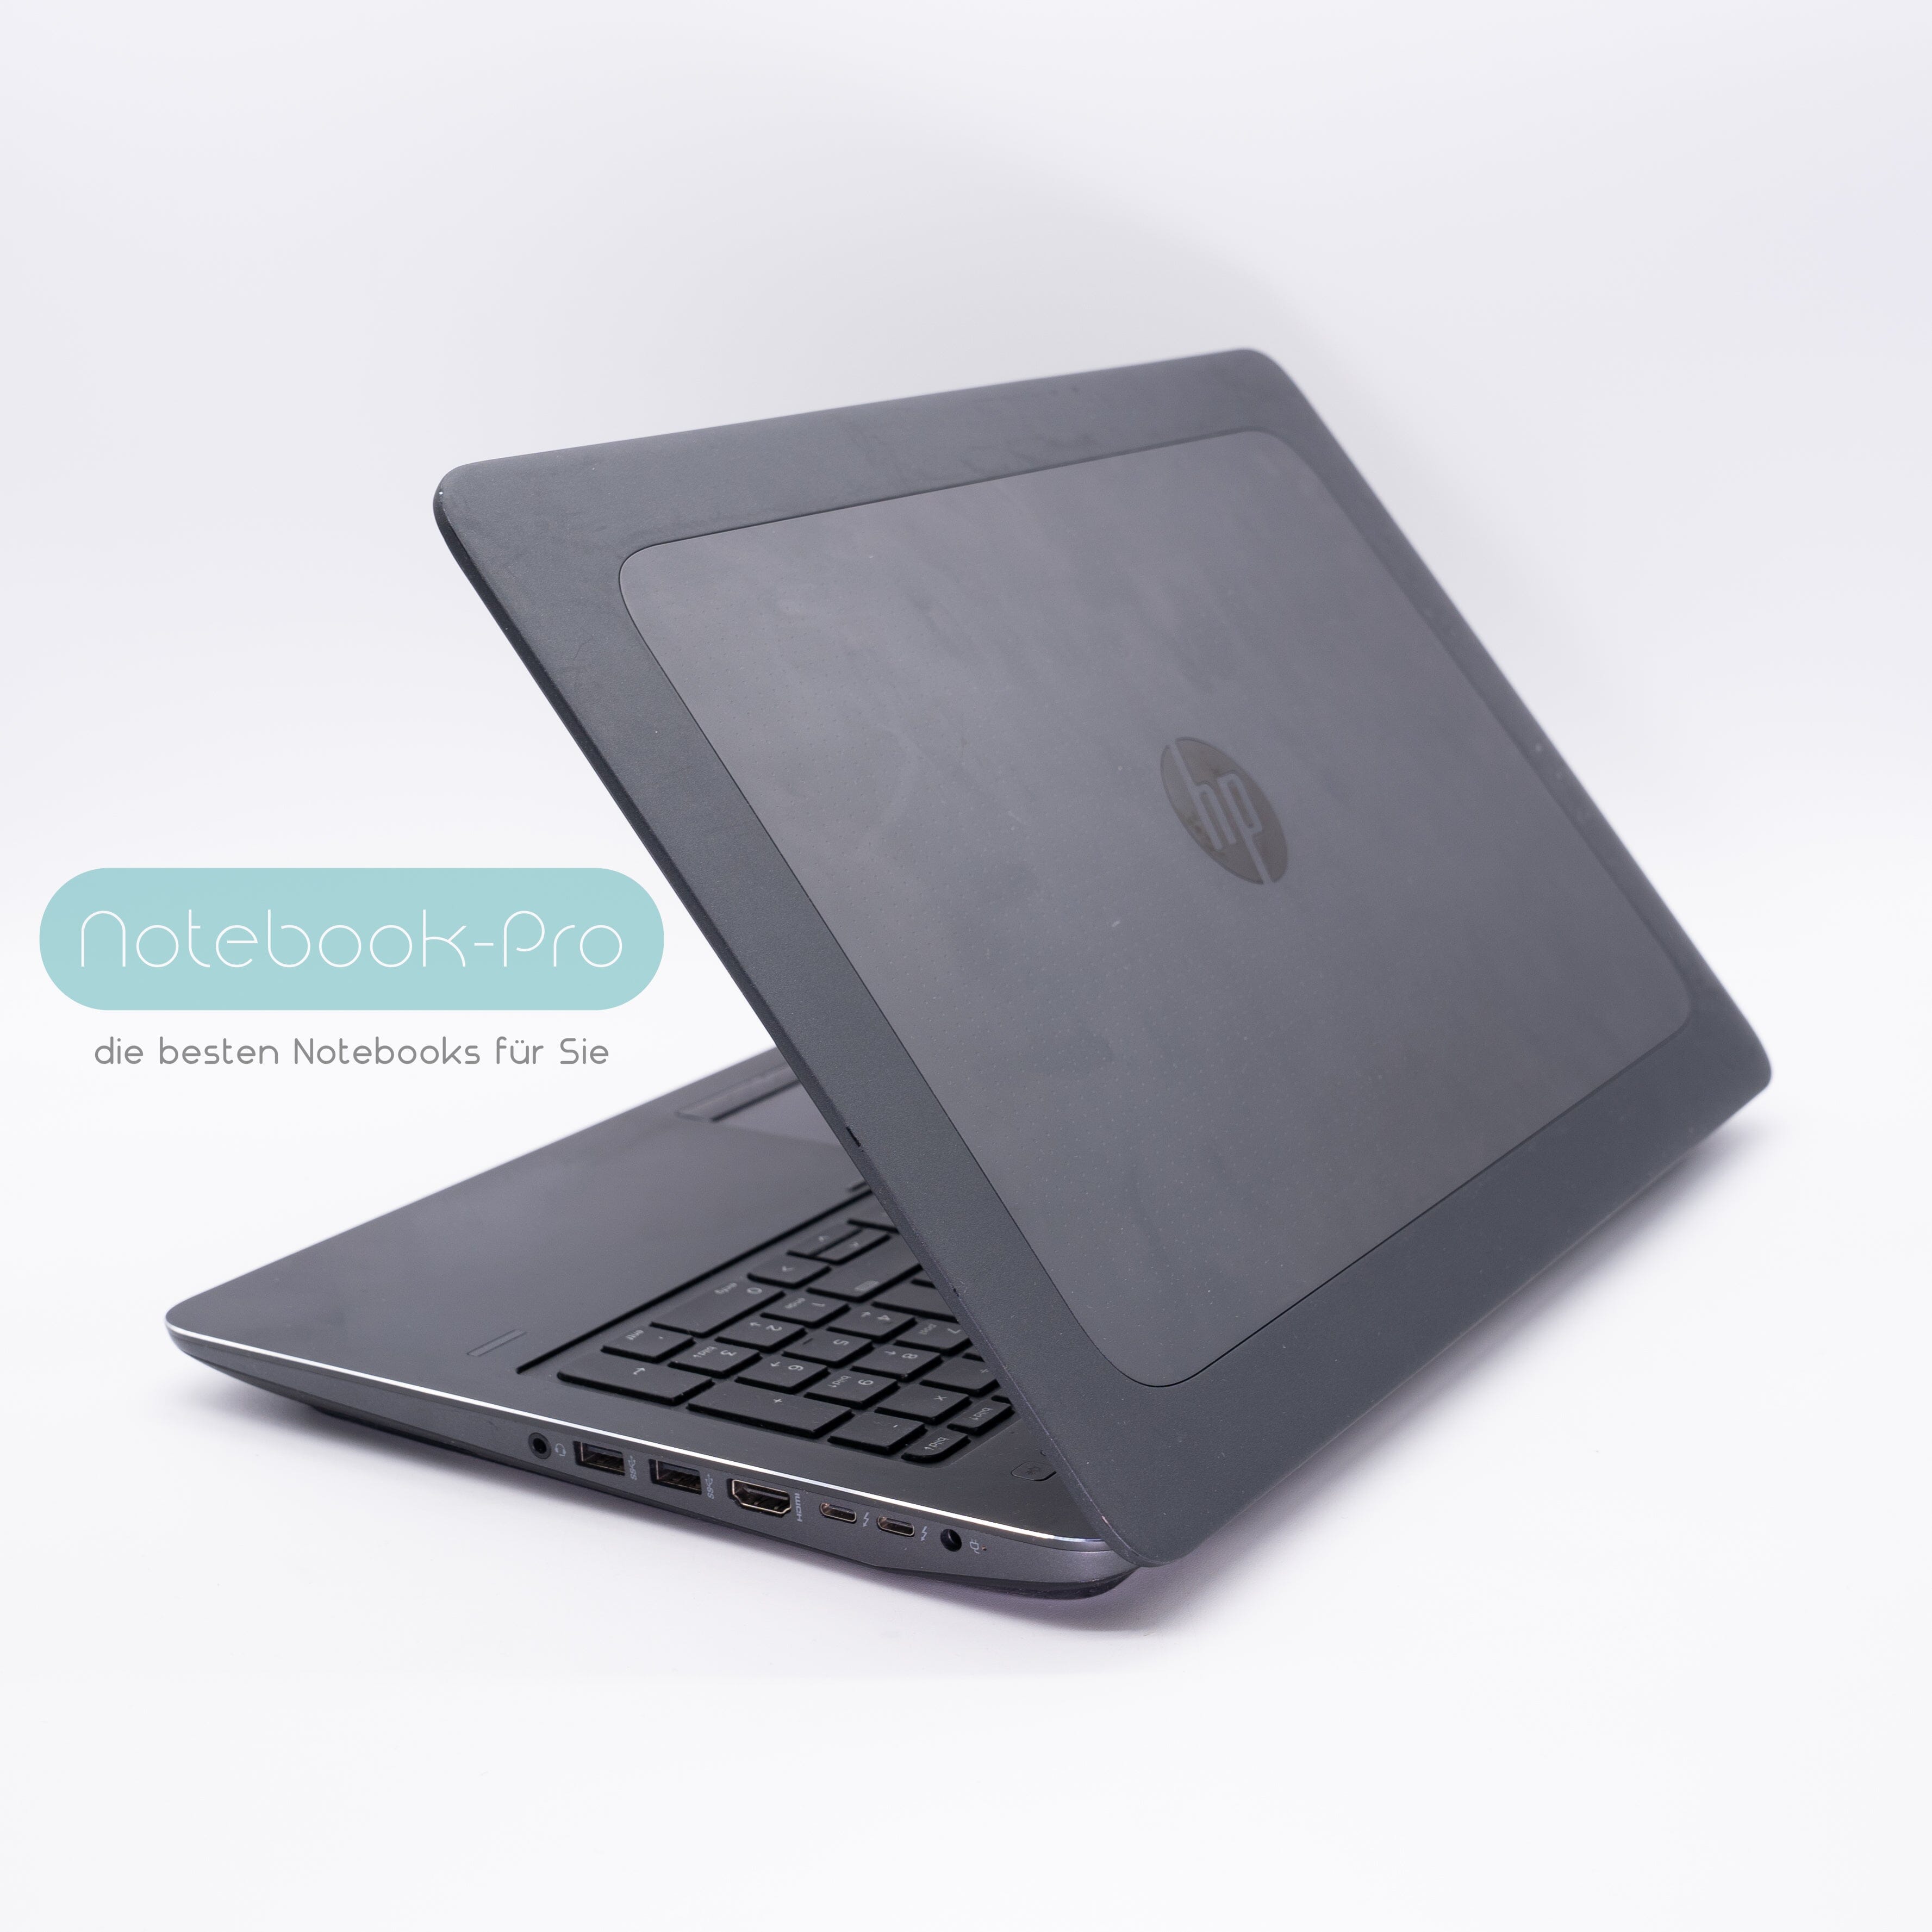 HP Zbook 15 G3 i7-6820HQ NVIDIA QUADRO M1000M 512GB SSD Laptops Notebook-Pro 